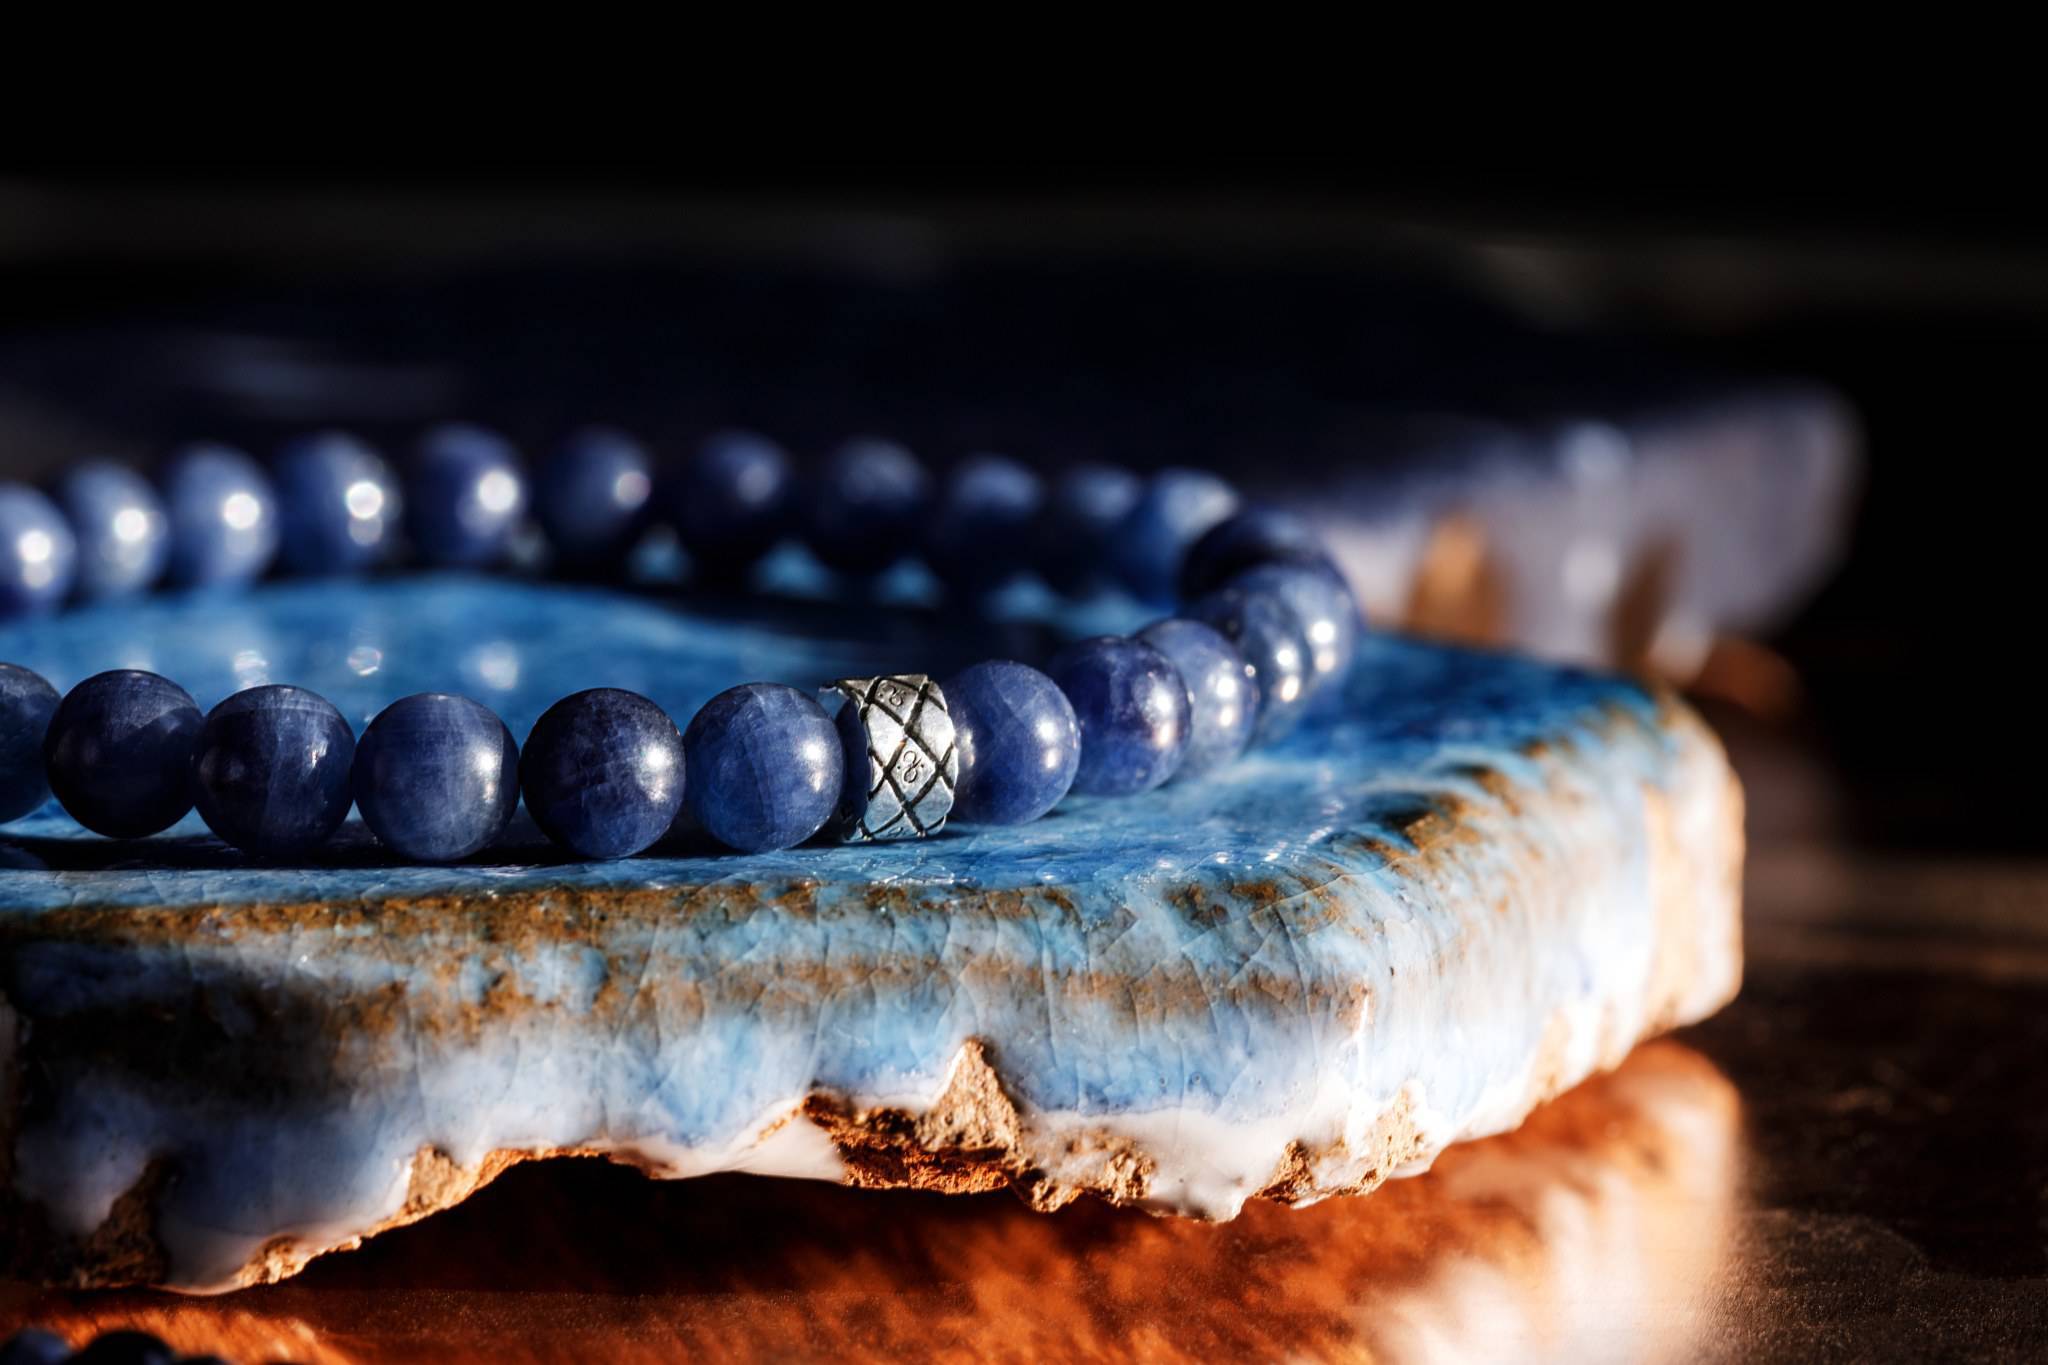 Blue Sapphire Bracelet VI (6mm) (6909928636470)